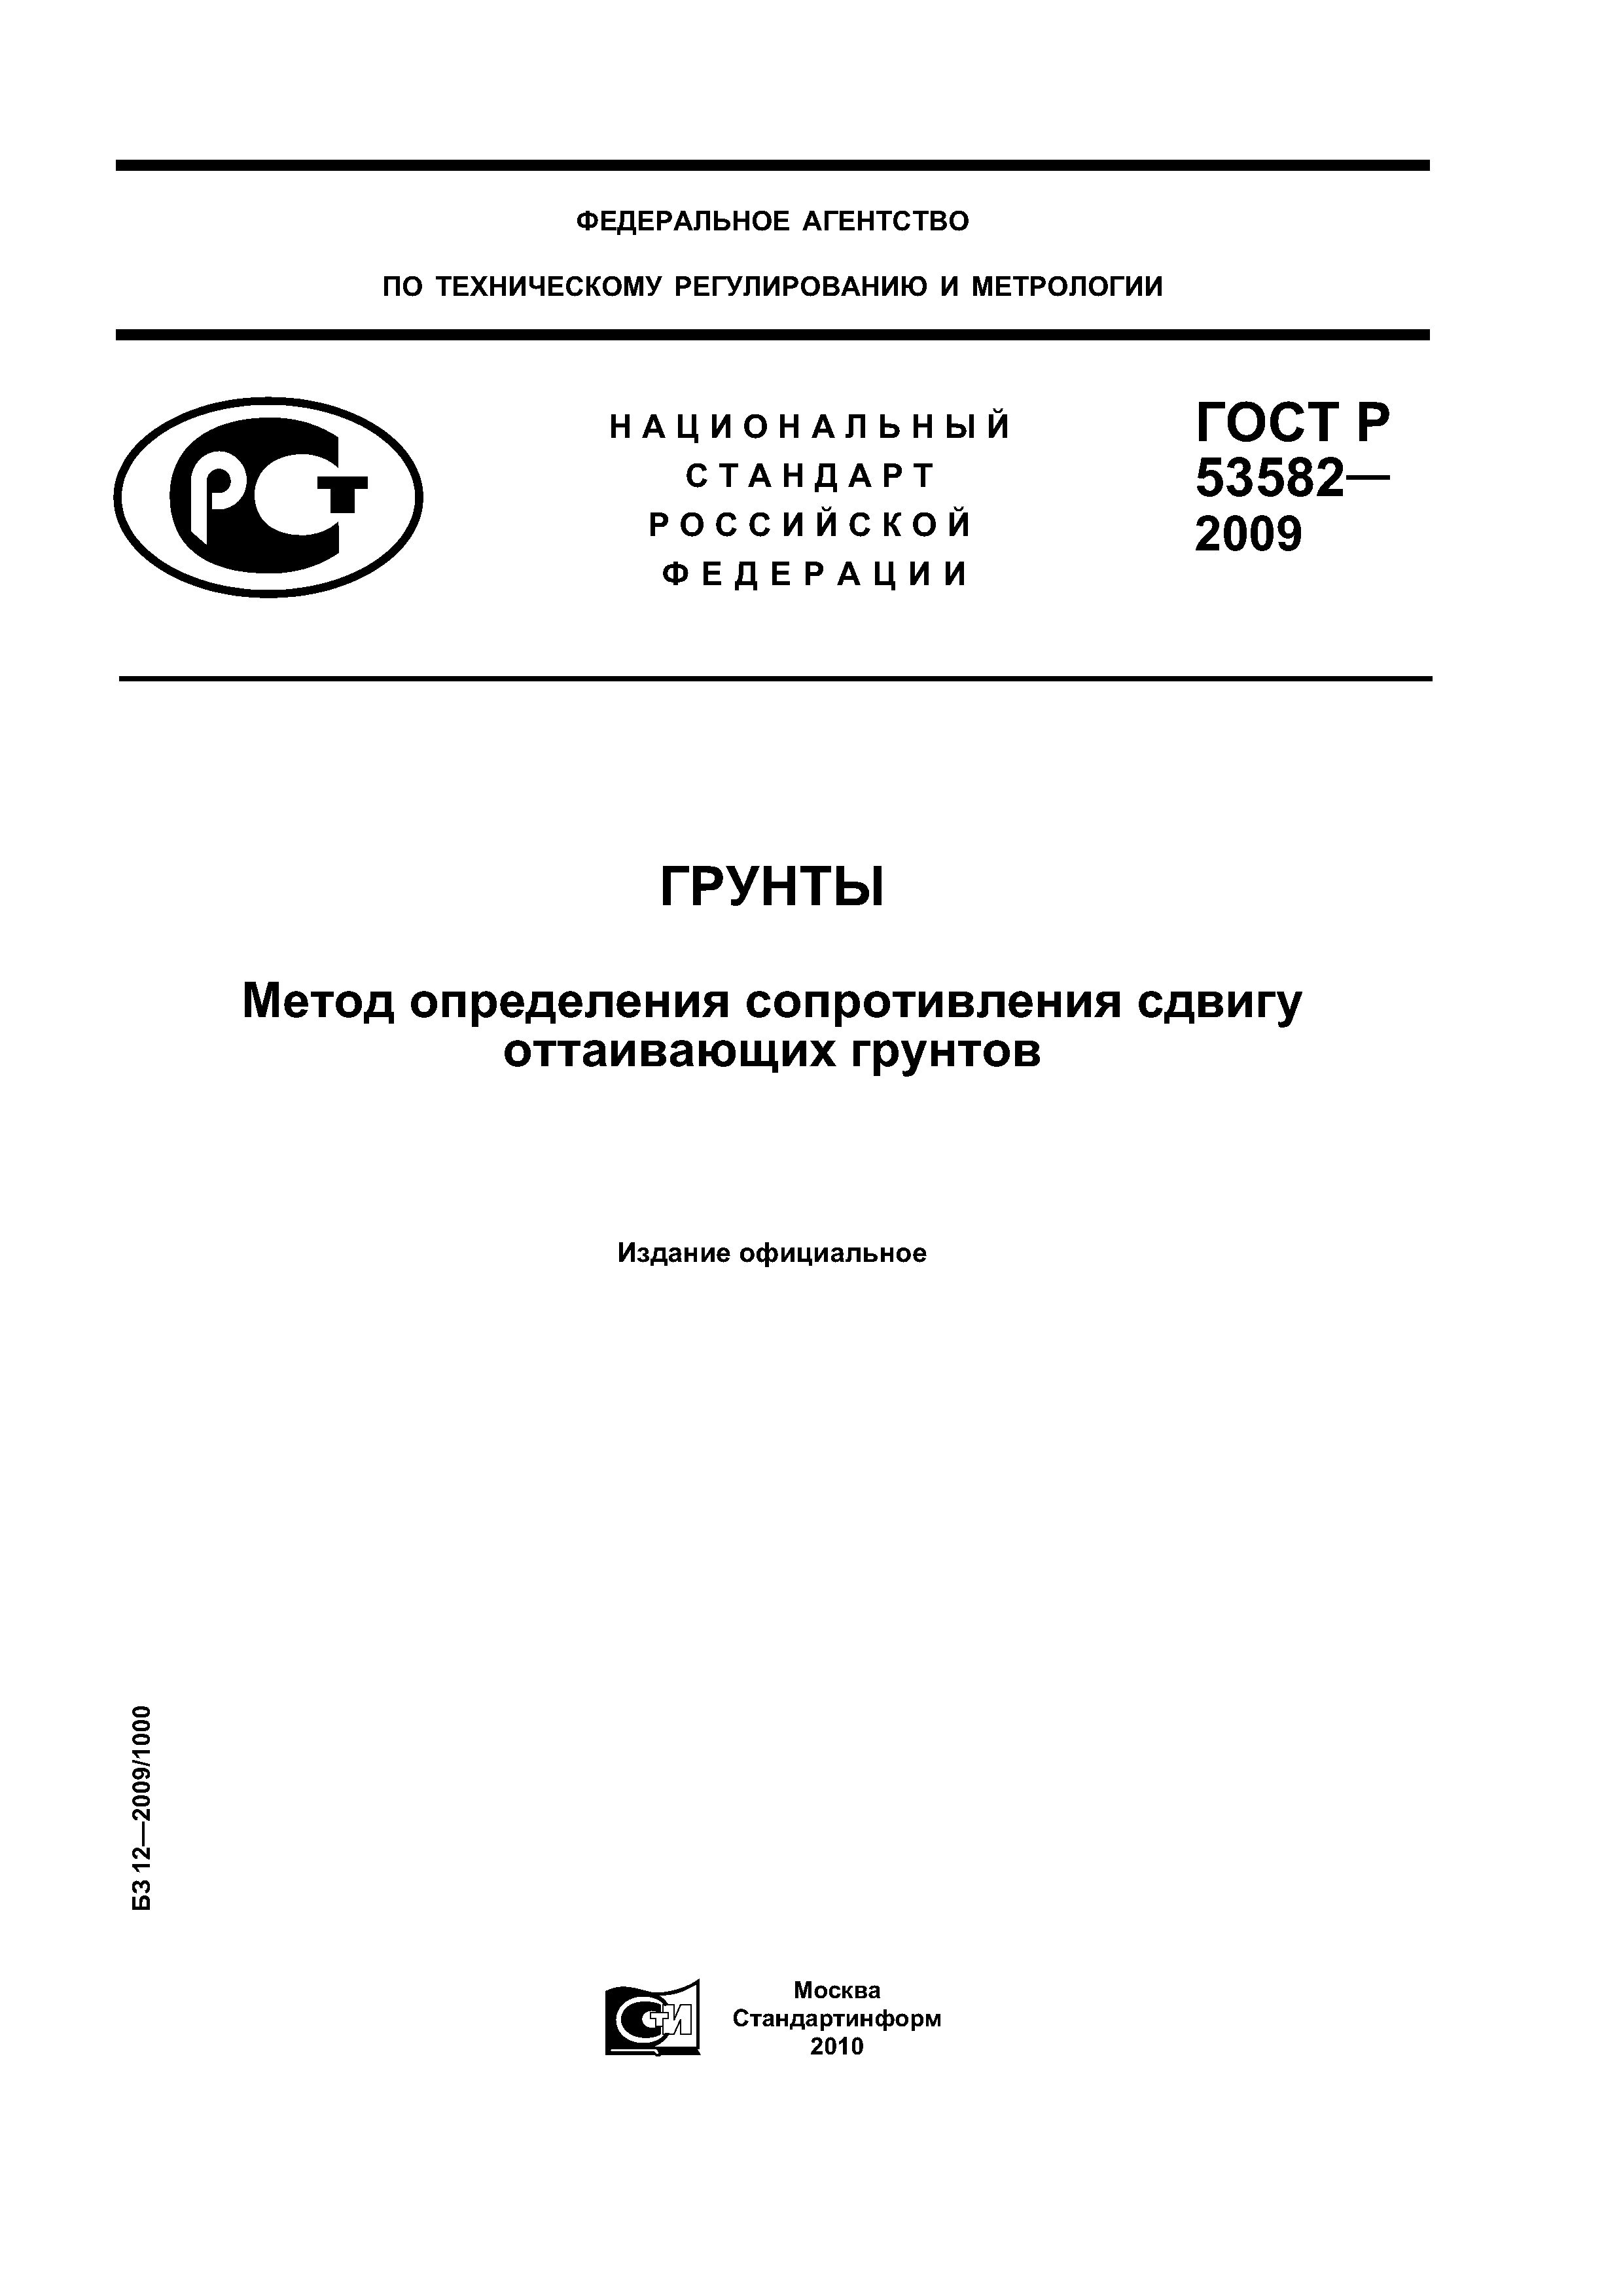 ГОСТ Р 53582-2009